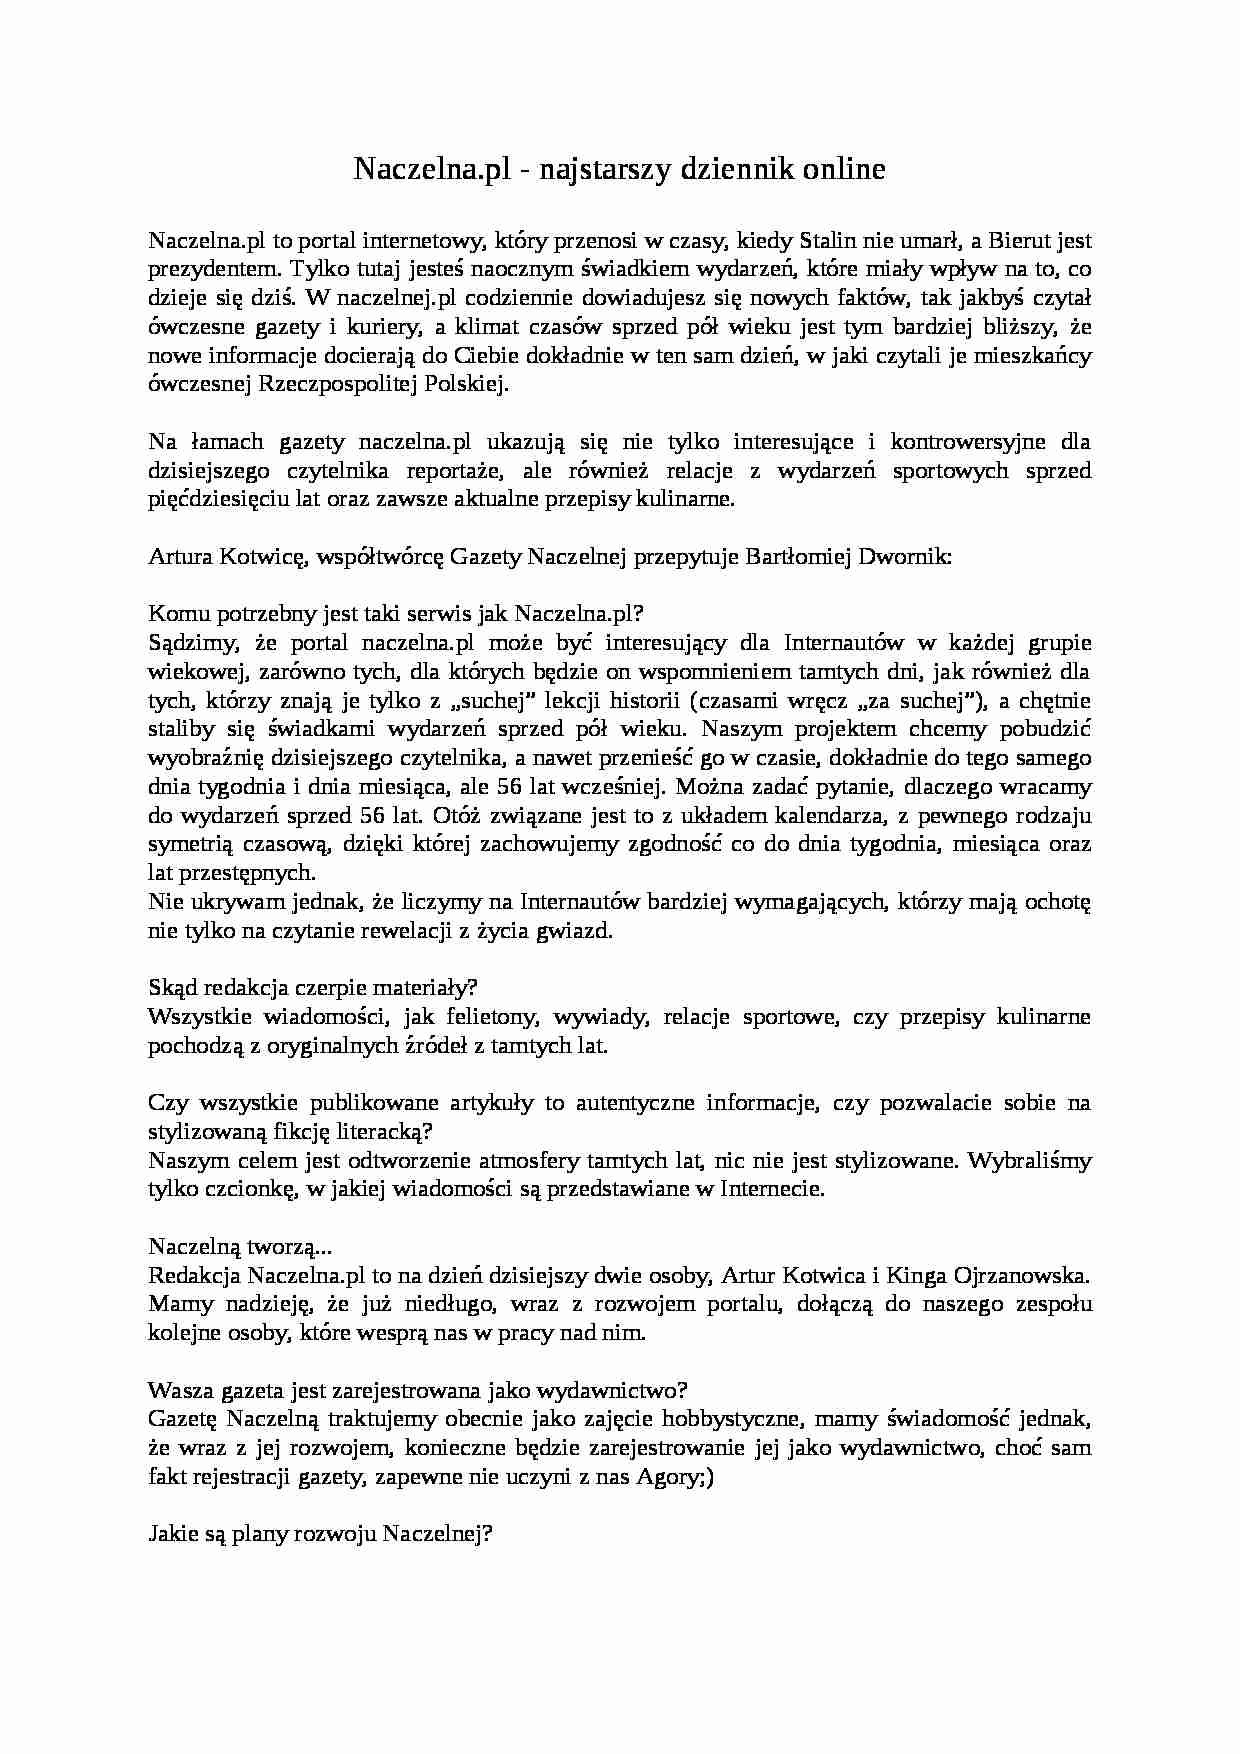 Radia i TV,Naczelna.pl - najstarszy dziennik online - strona 1